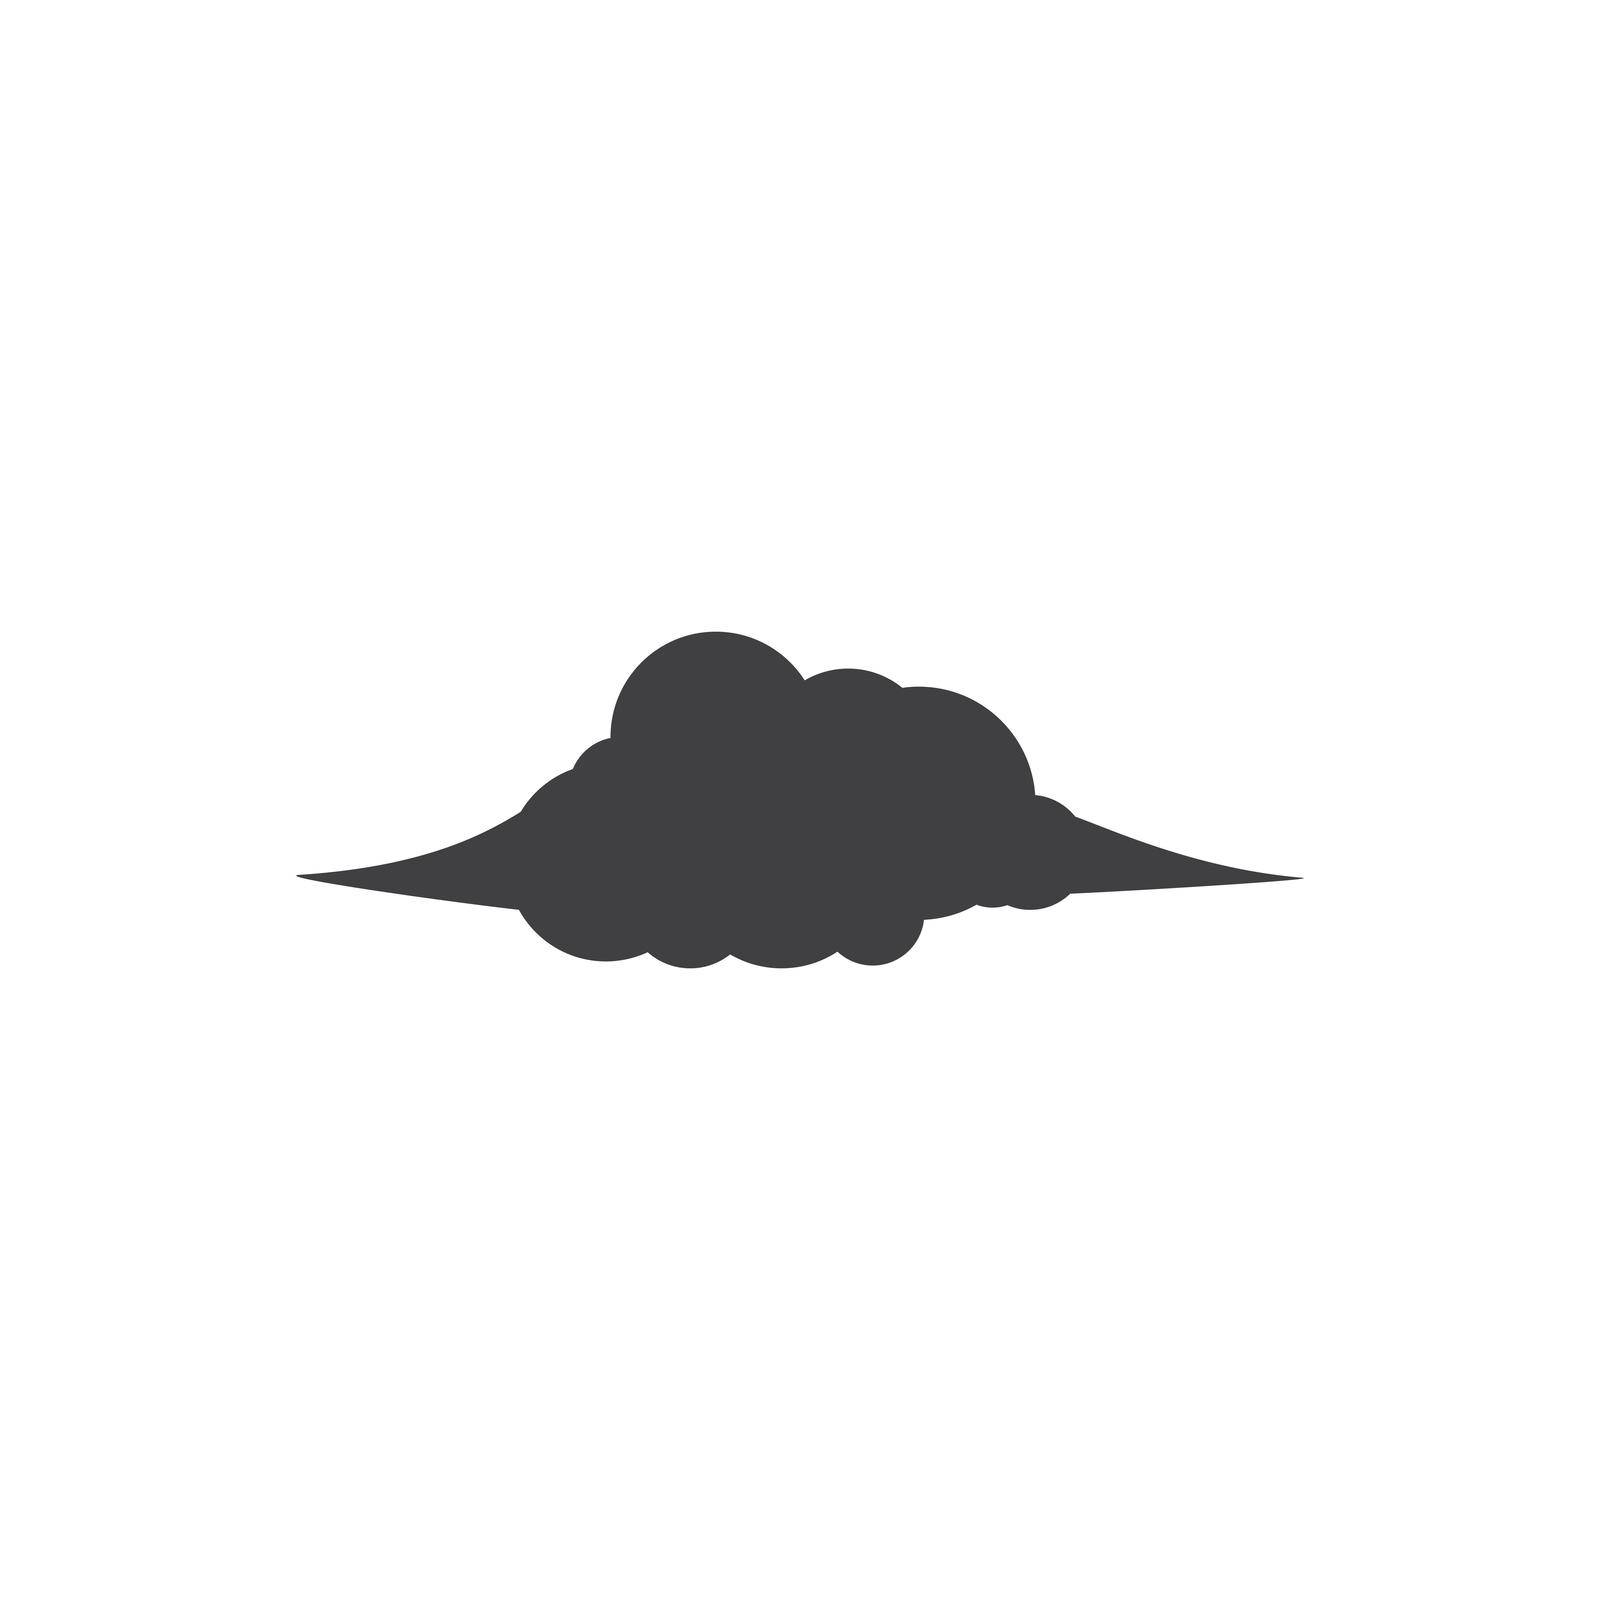 Cloud silhouette icon vector flat design